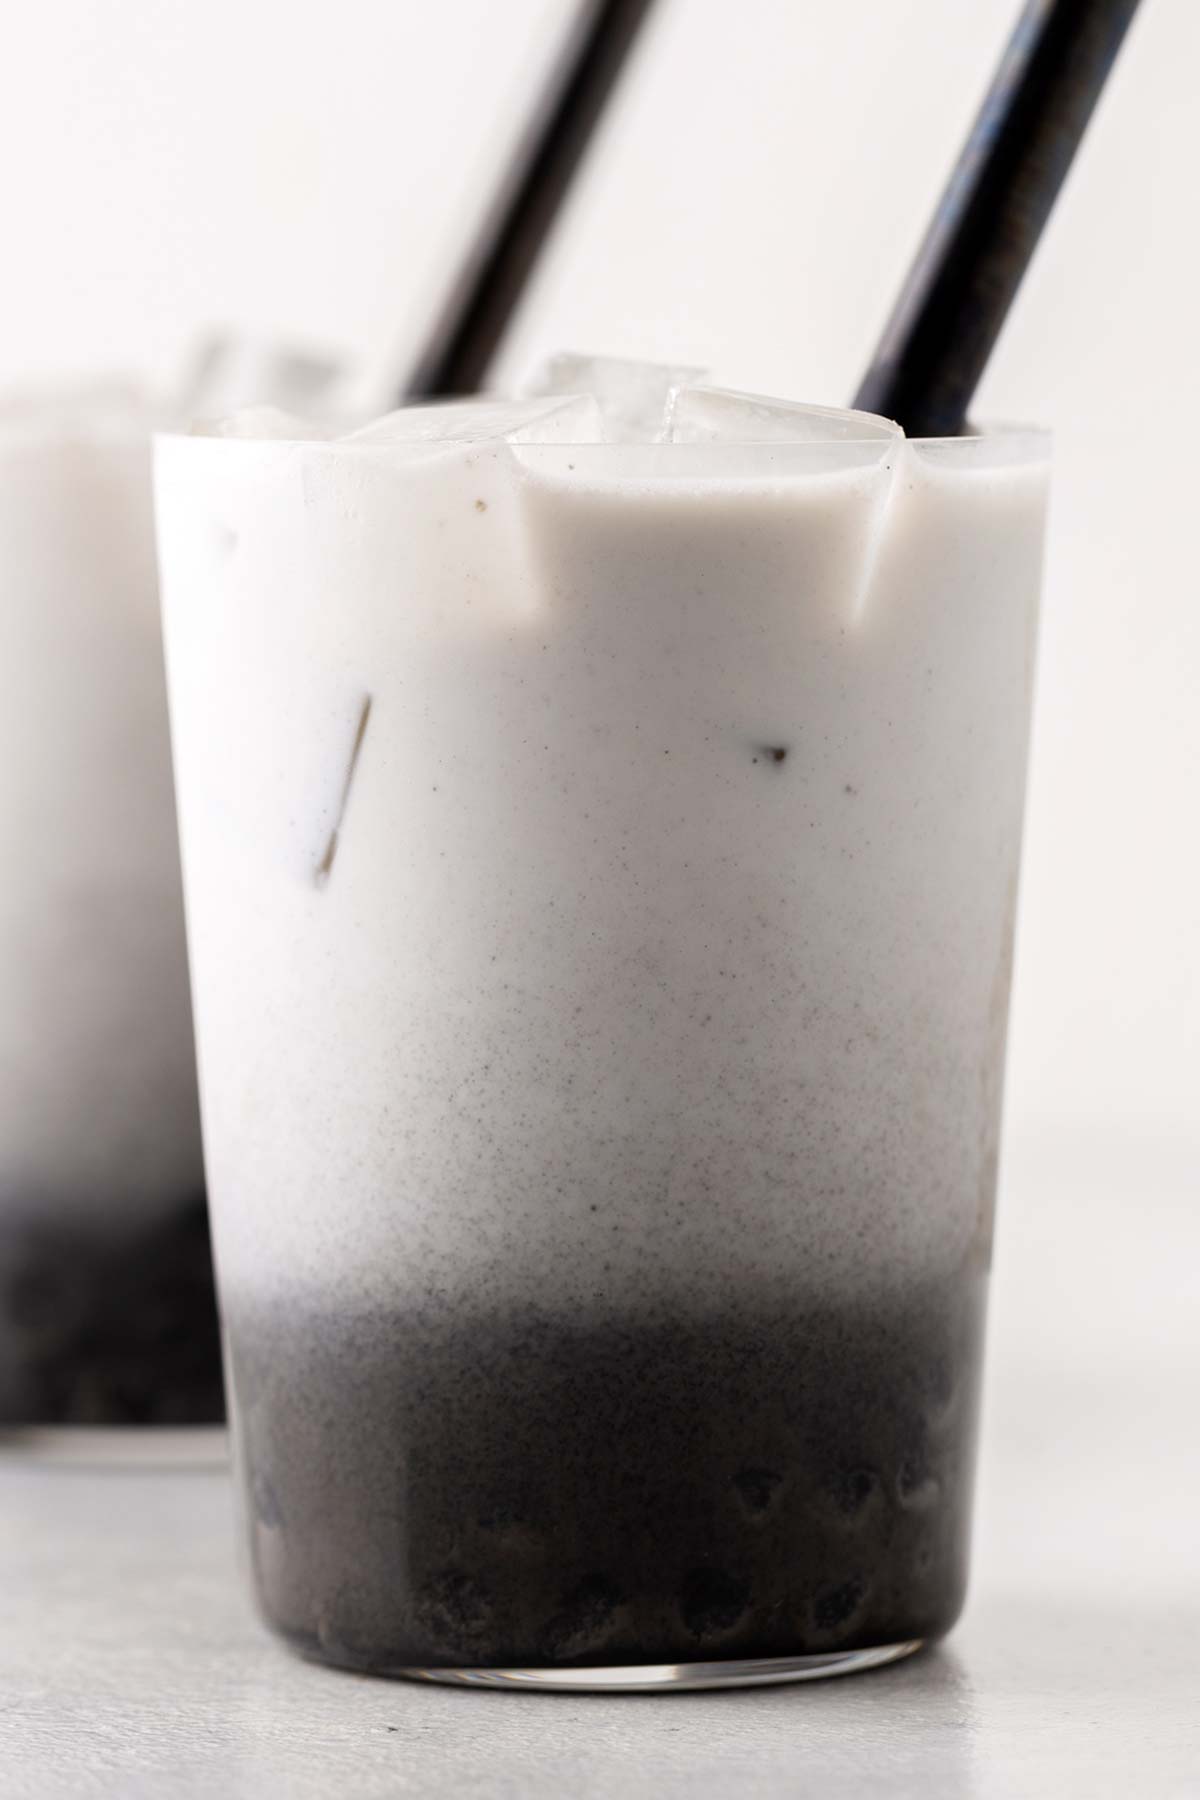 Black Sesame Bubble Tea (Black Sesame Boba Milk Tea) in a clear glass with wide straw.